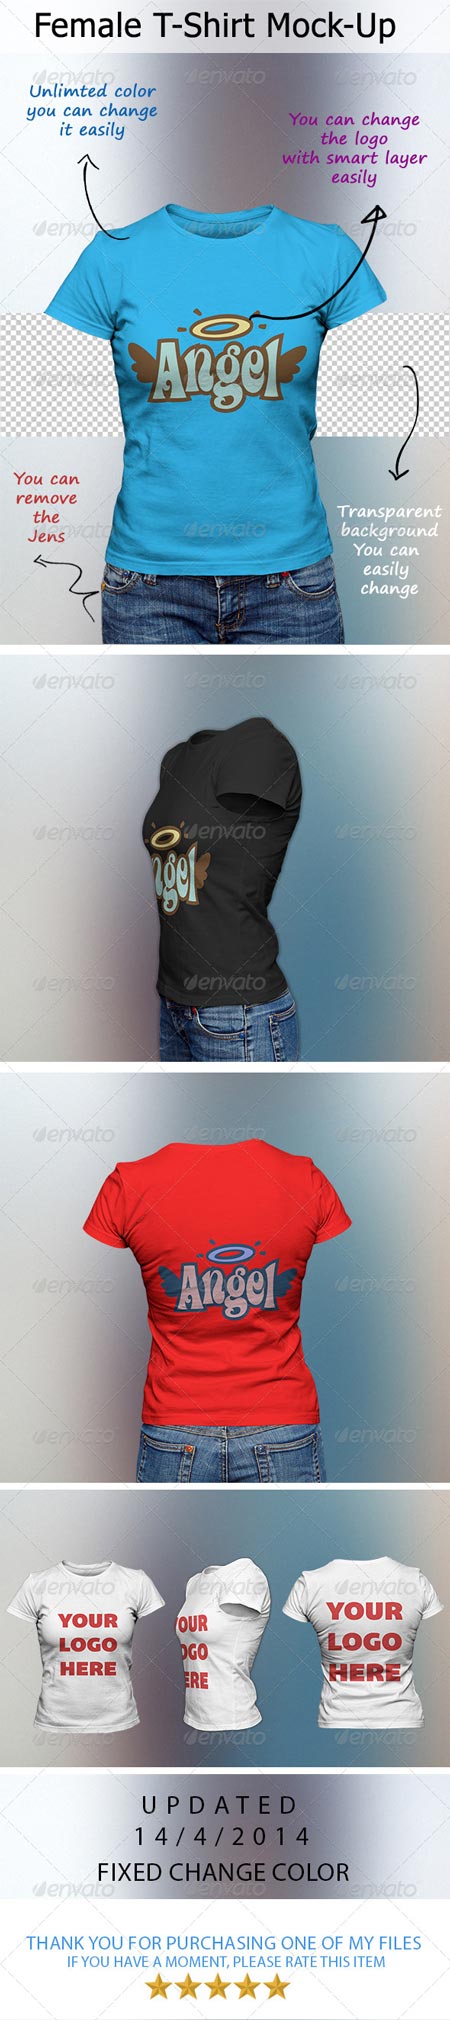 Female T-Shirt Mock-Up 4600045